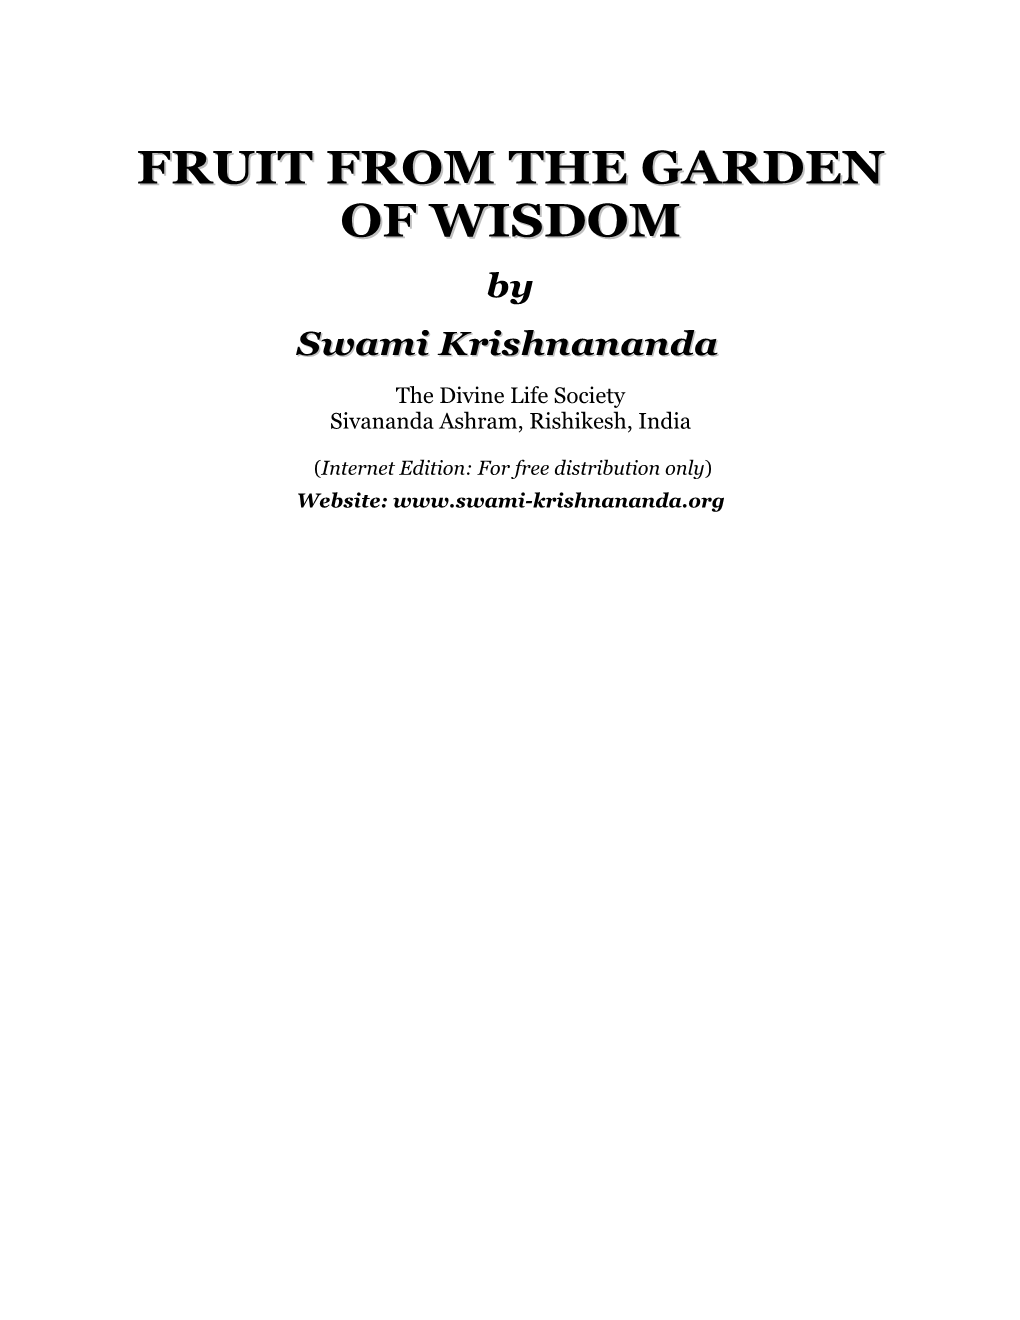 Fruit from the Garden of Wisdom